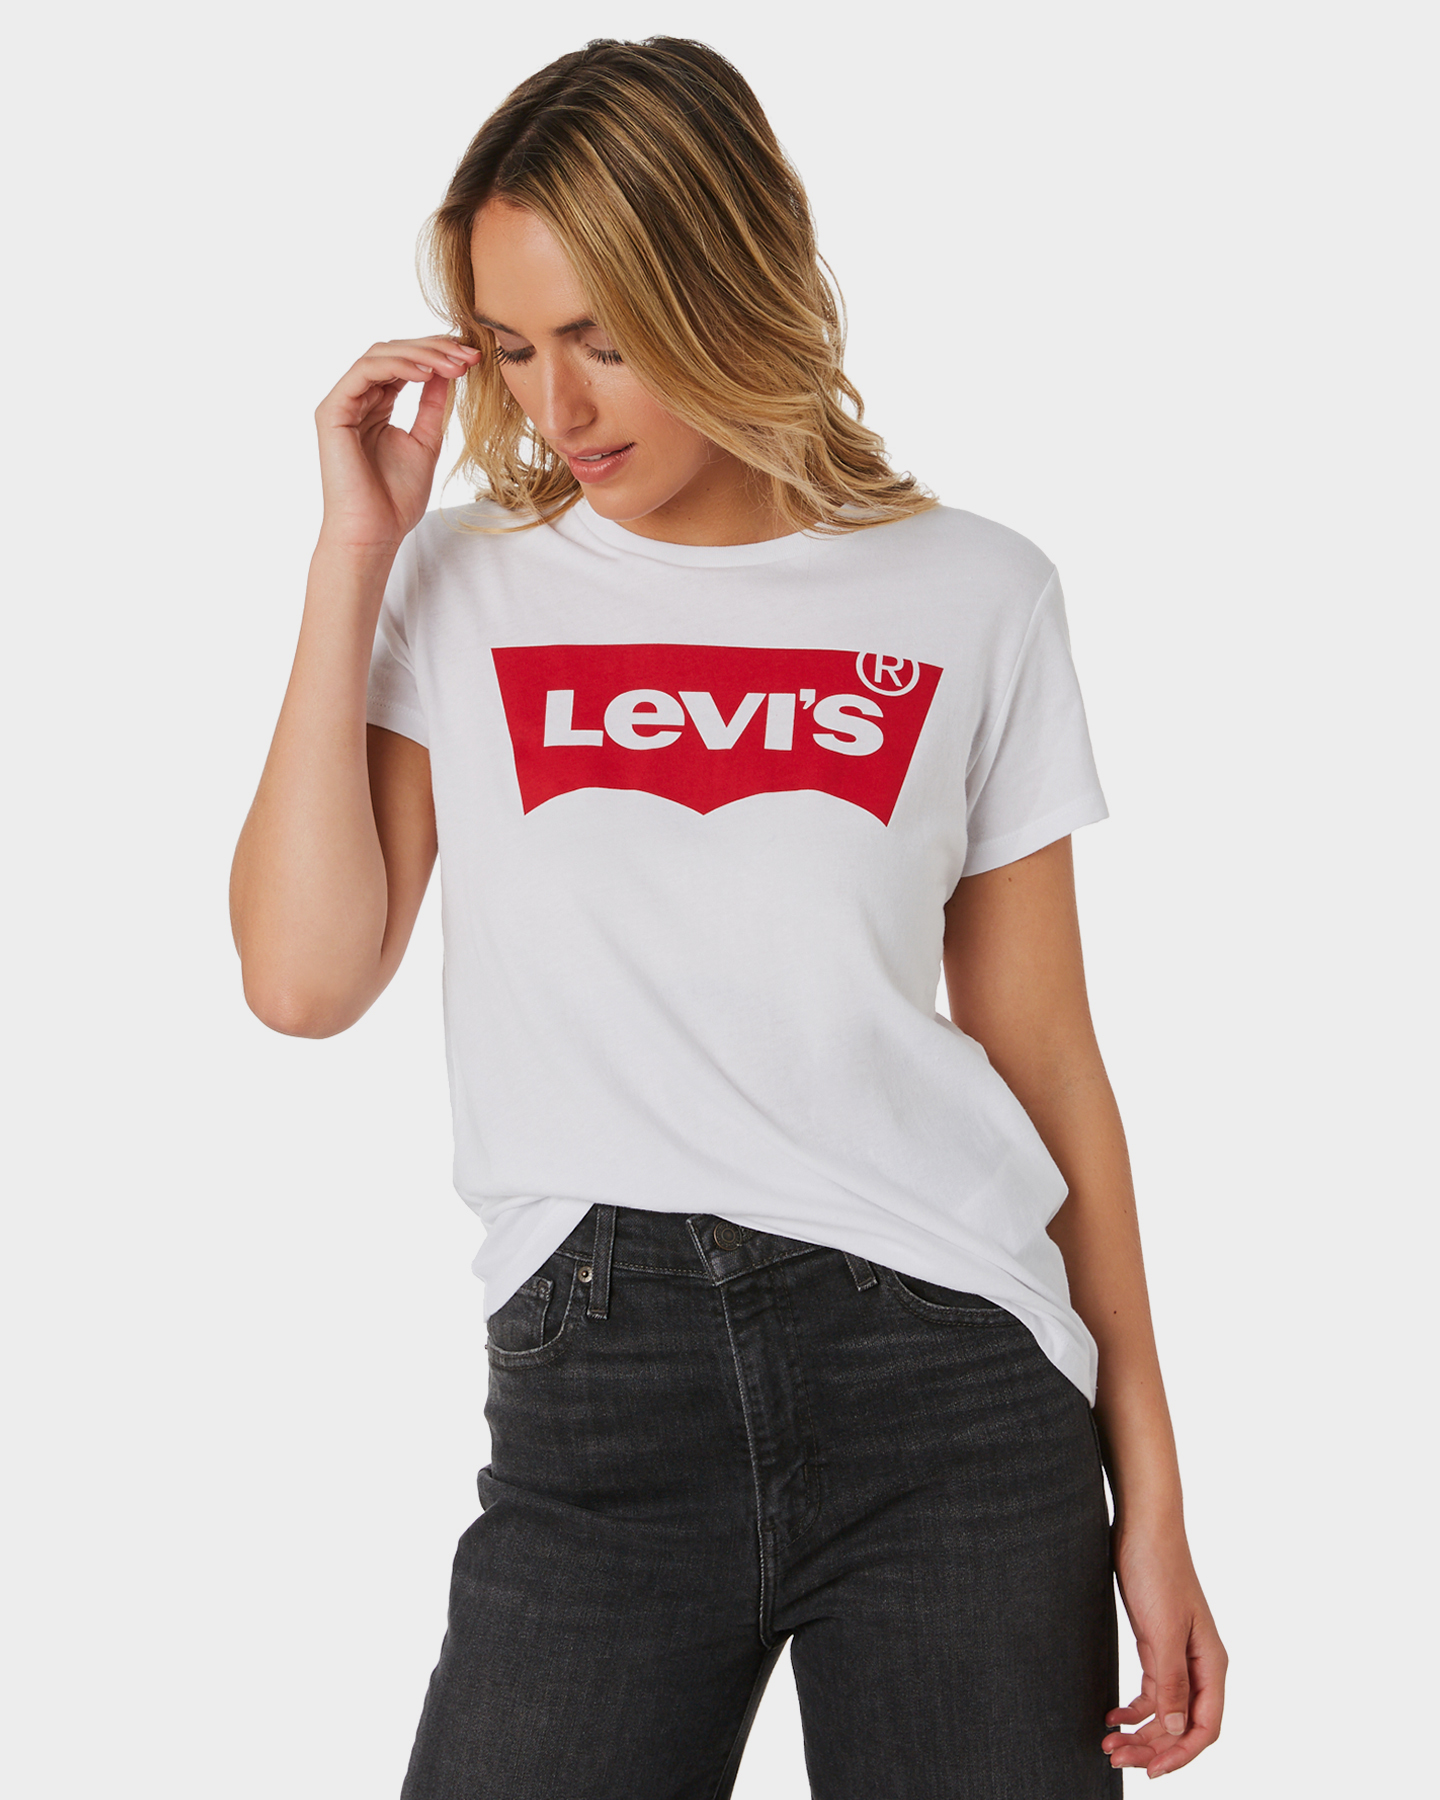 levi's white t shirt womens